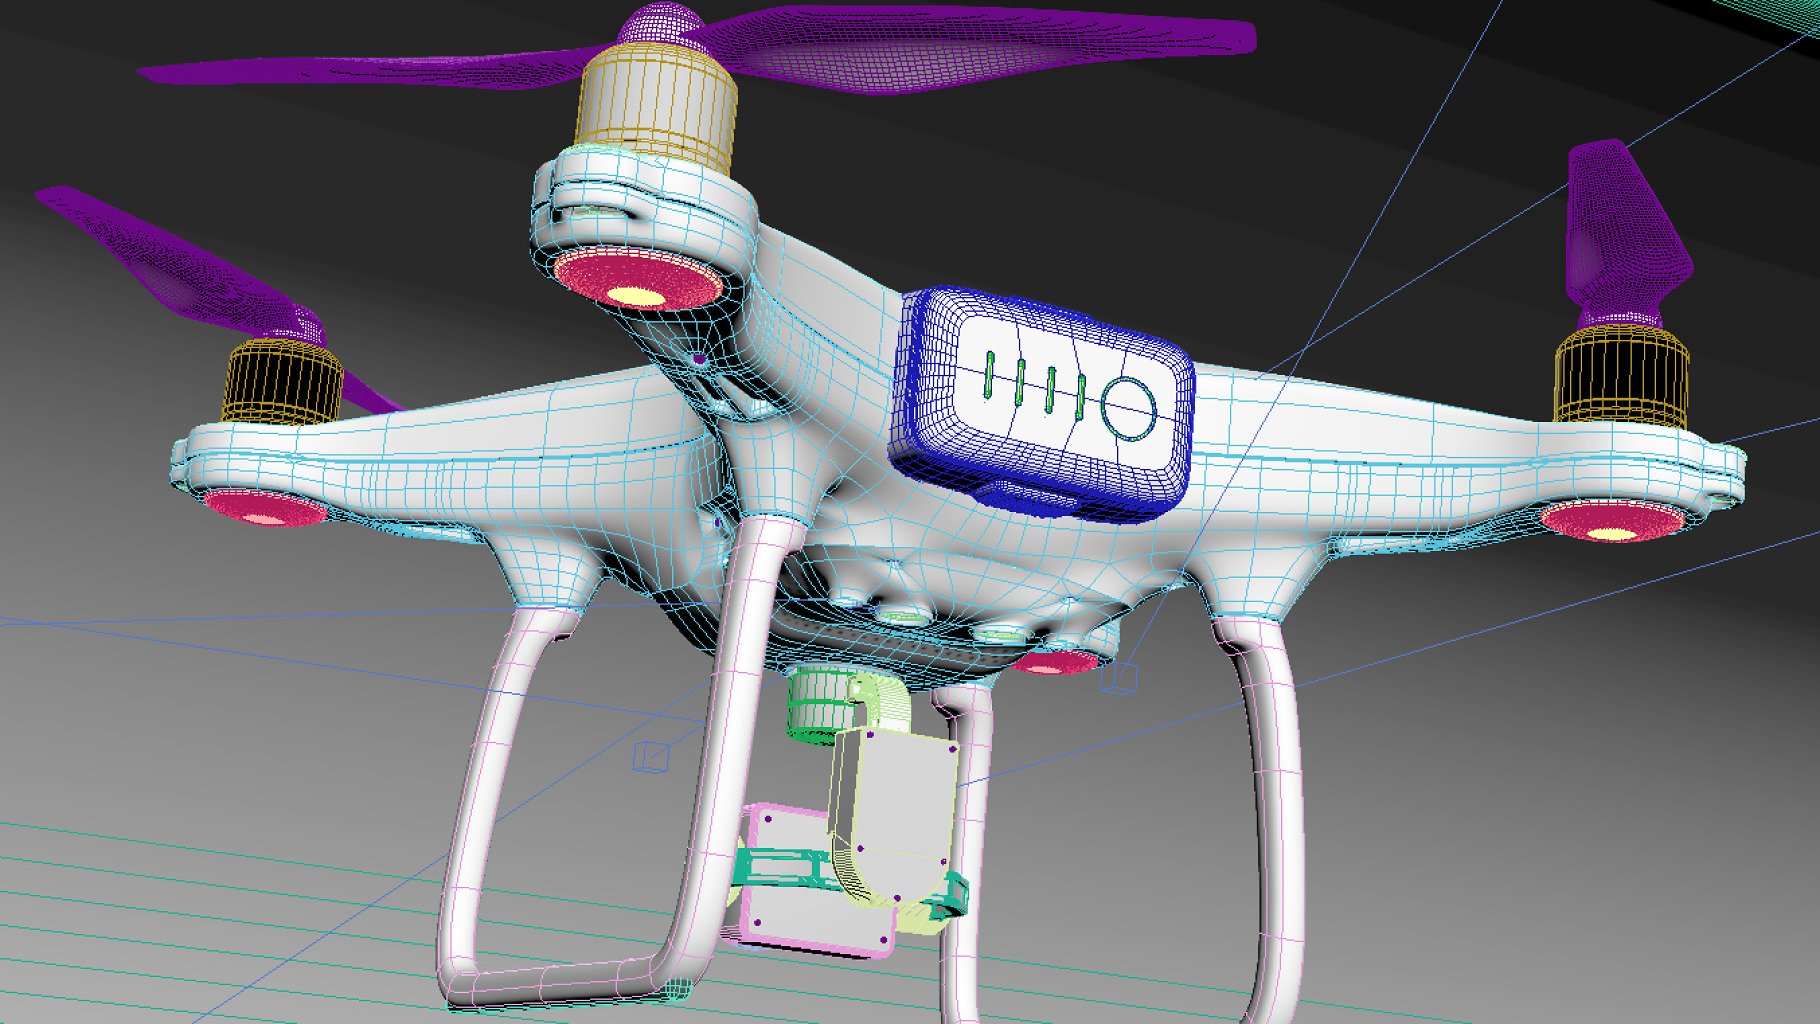 Images of an enchanting 3d model of a white drone dji phantom 4